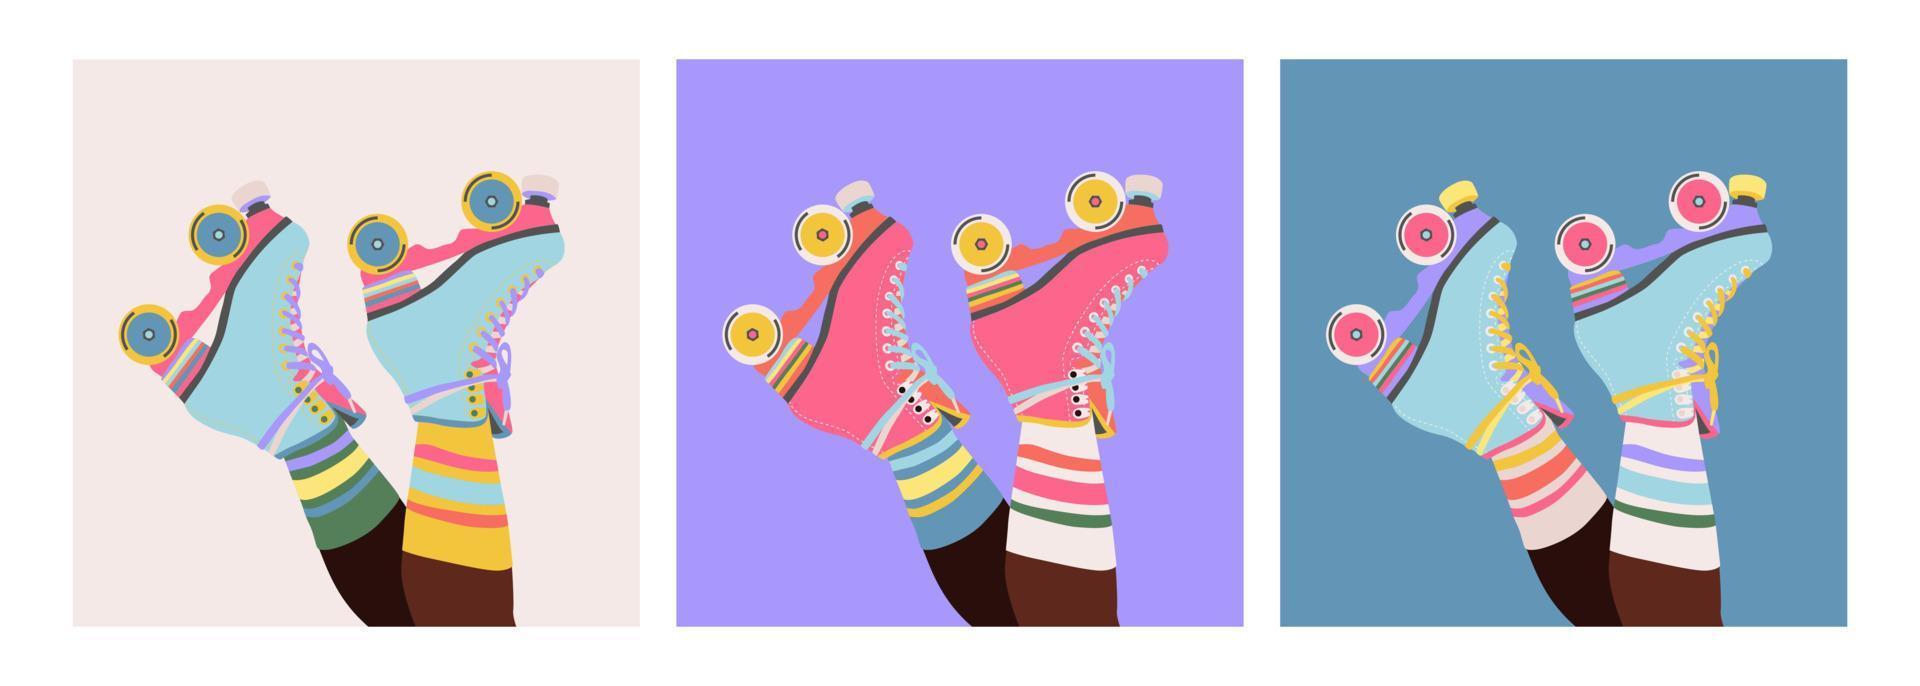 Set of roller skates on woman legs with long socks. Girls wearing roller skates. Hand-drawn trendy illustration of legs and rollerblades. Female legs. Pastel colour web banner design. Modern poster. vector